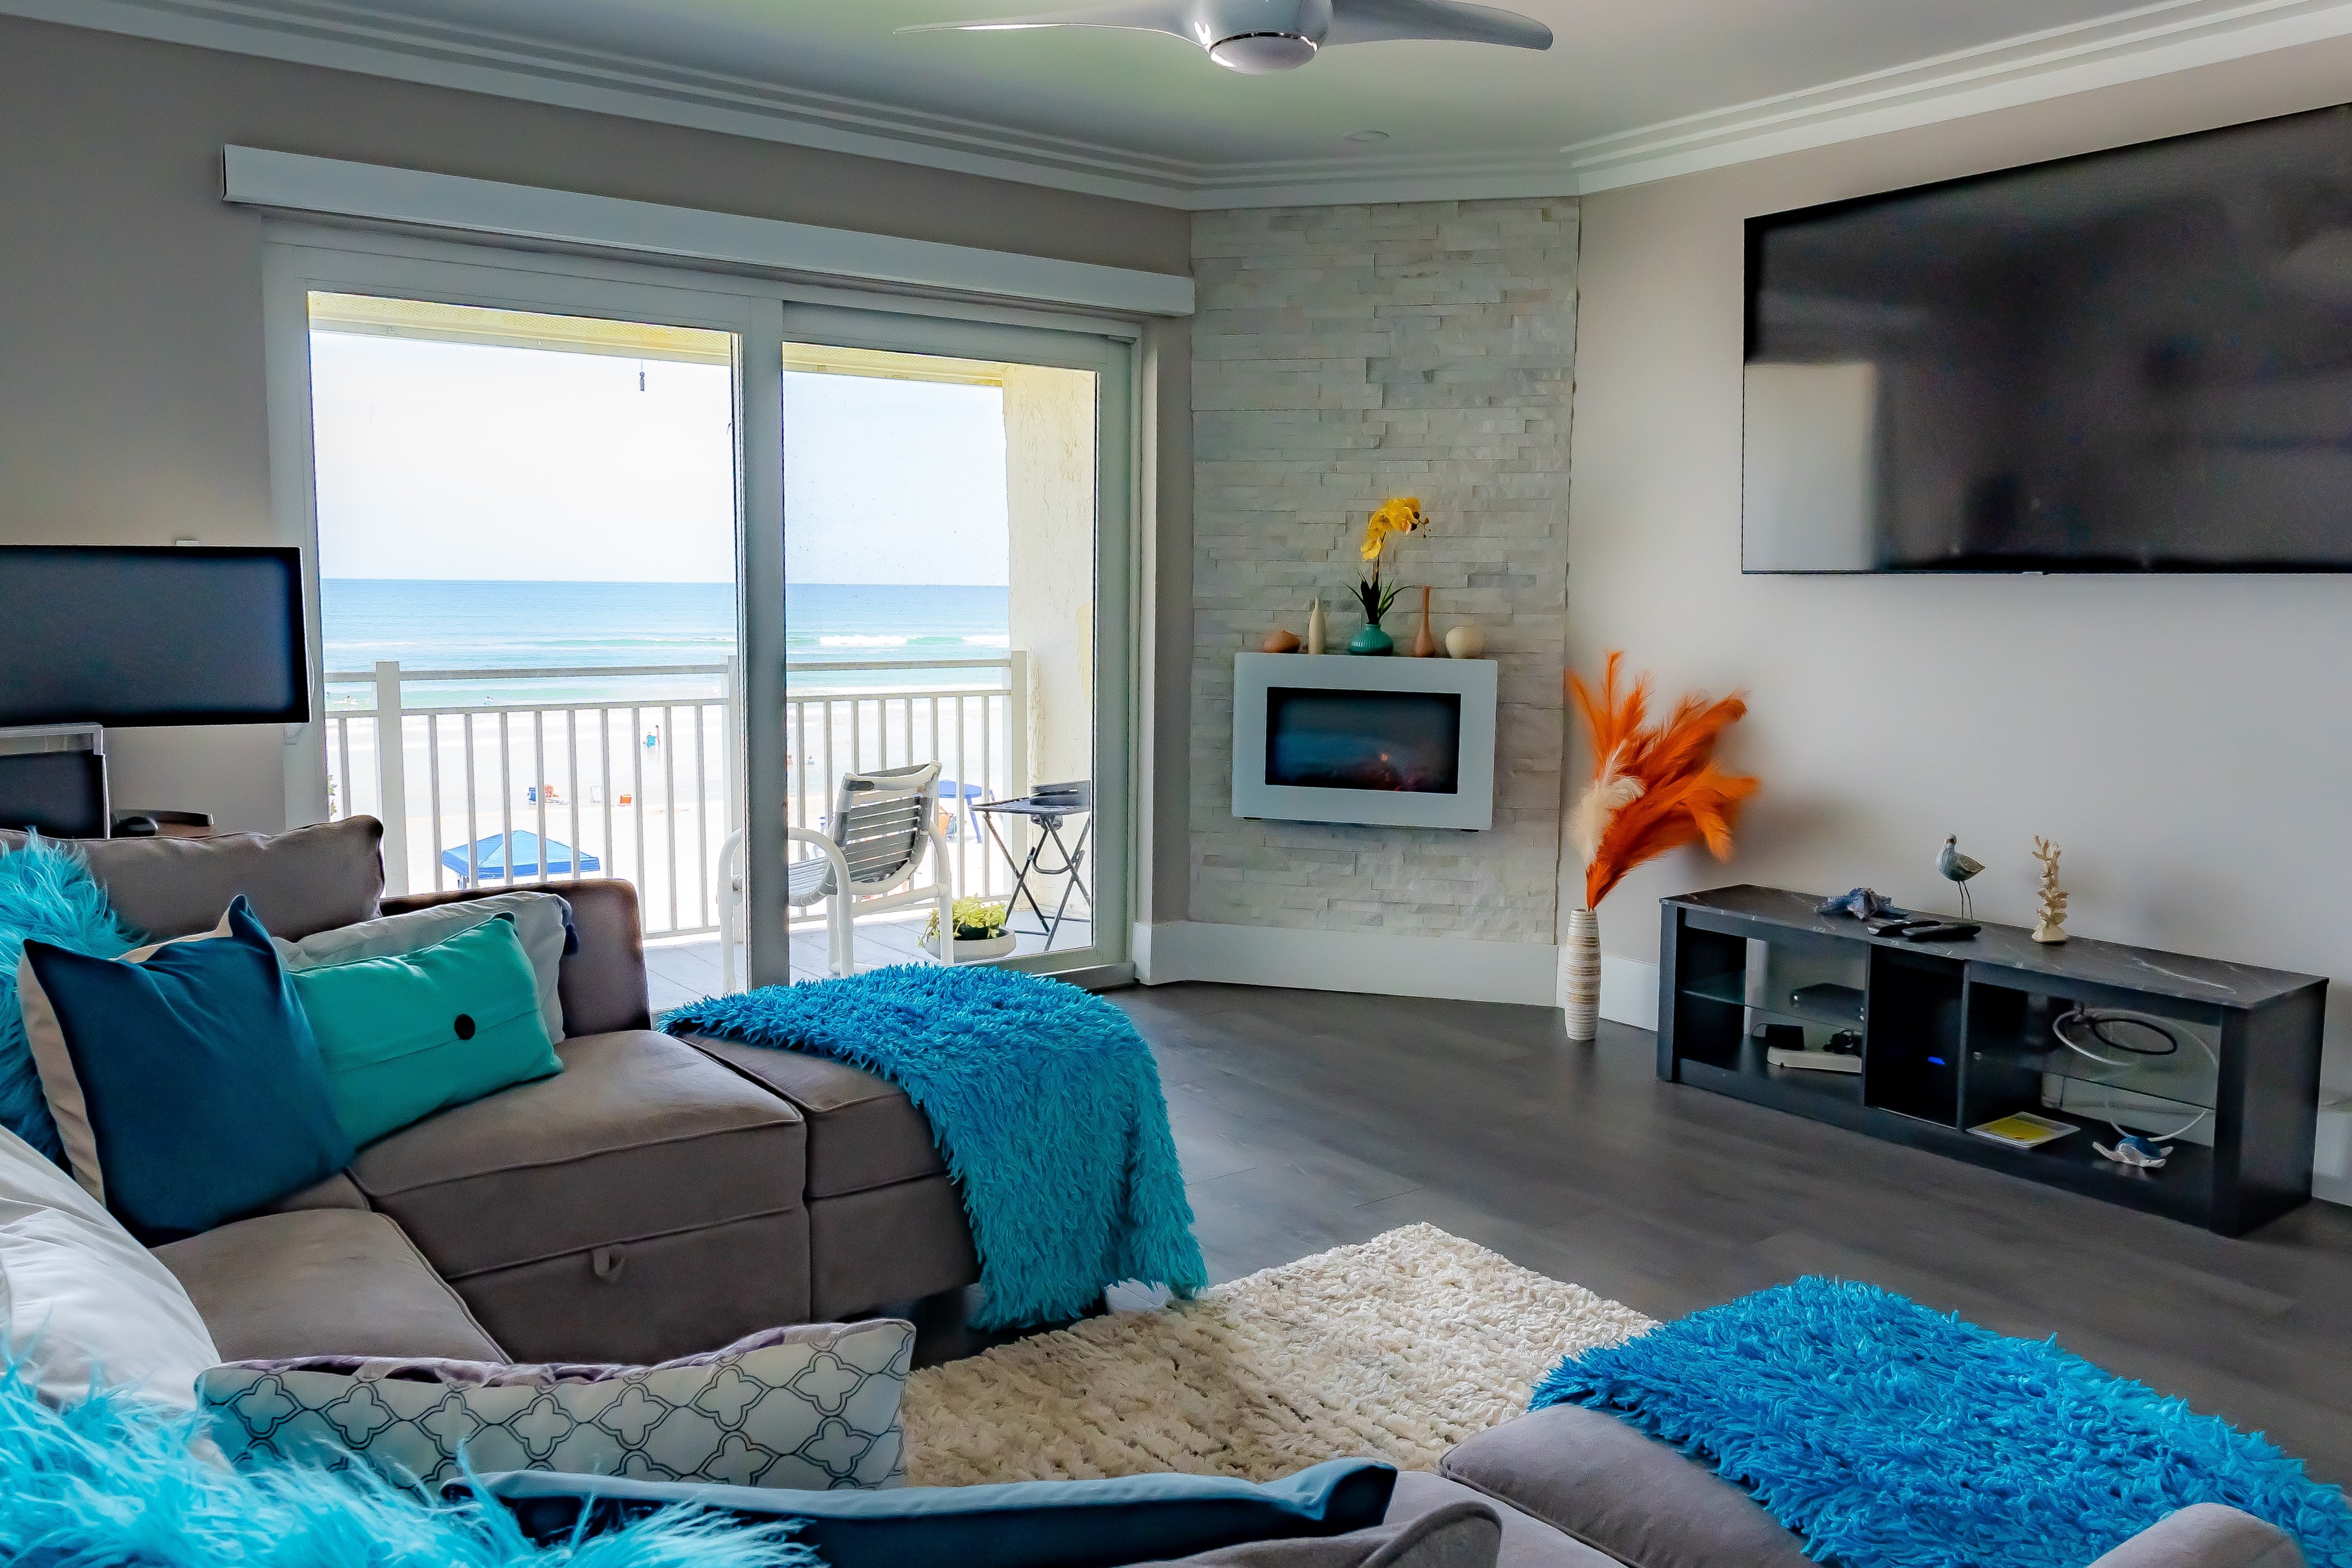 Living room has ocean view